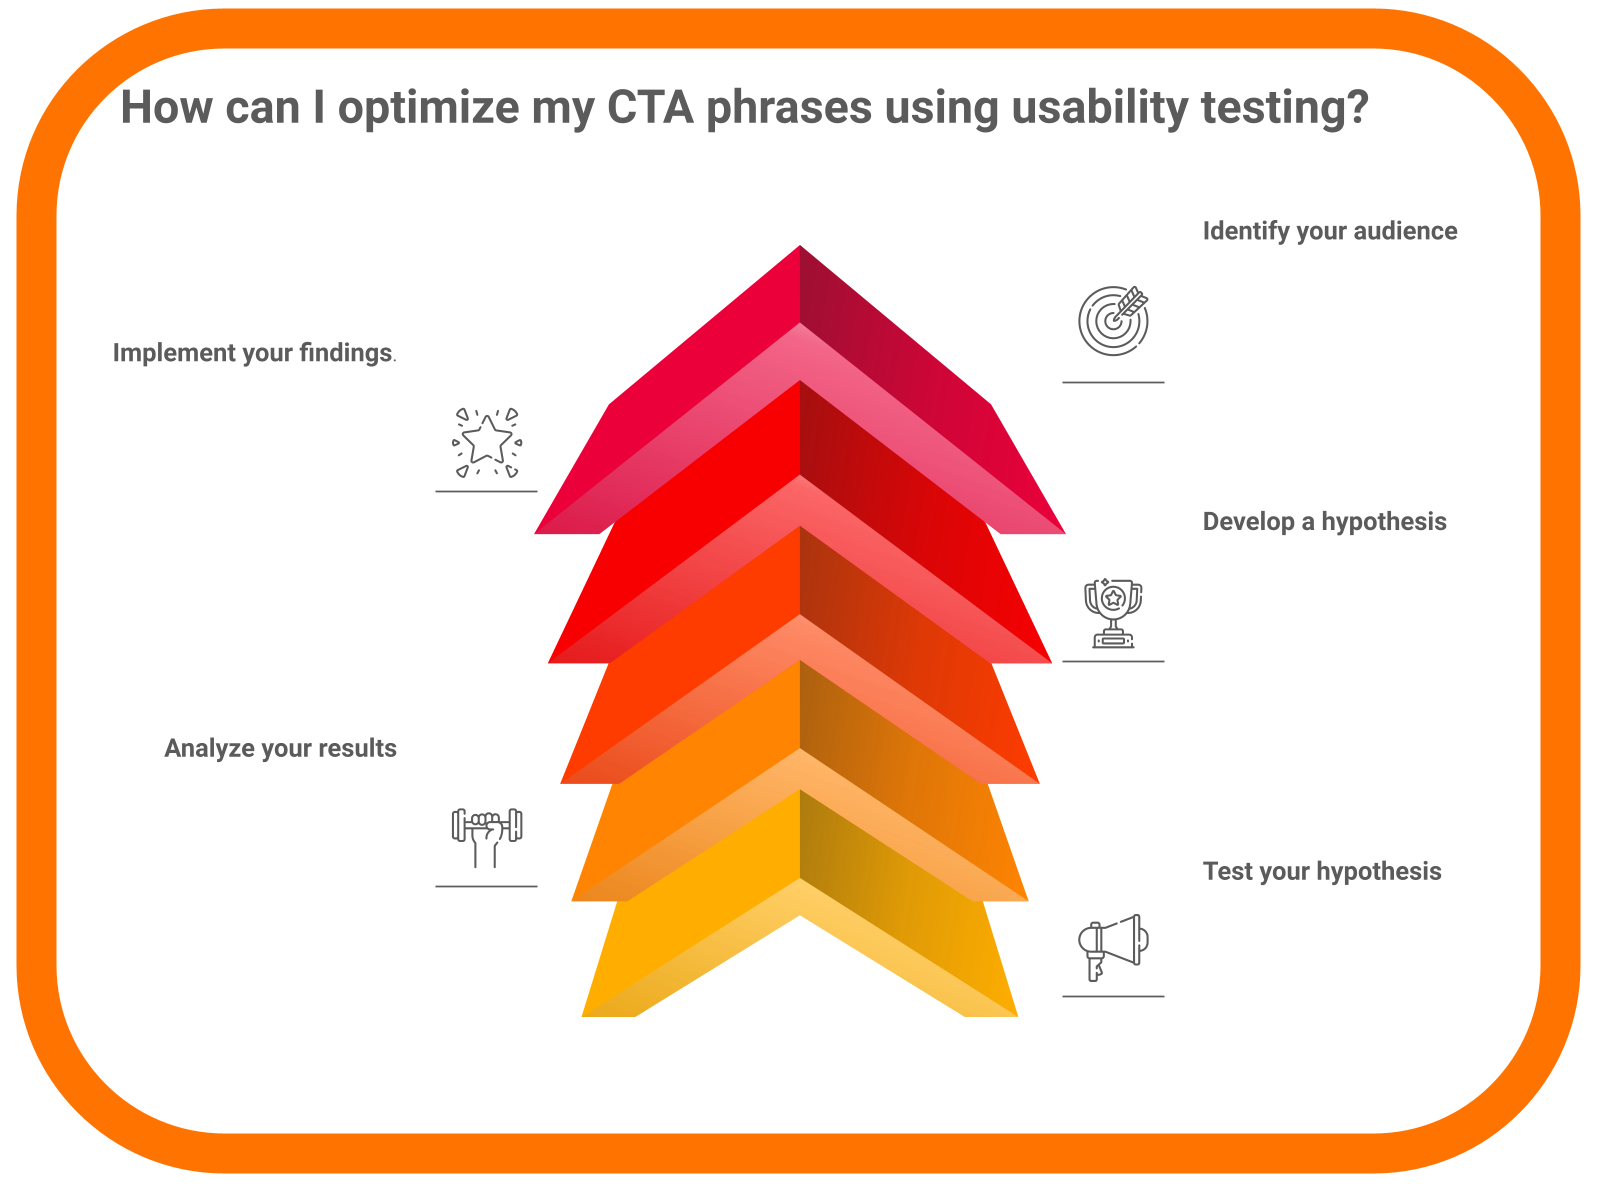 How can I optimize CTA phrases using usability testing?